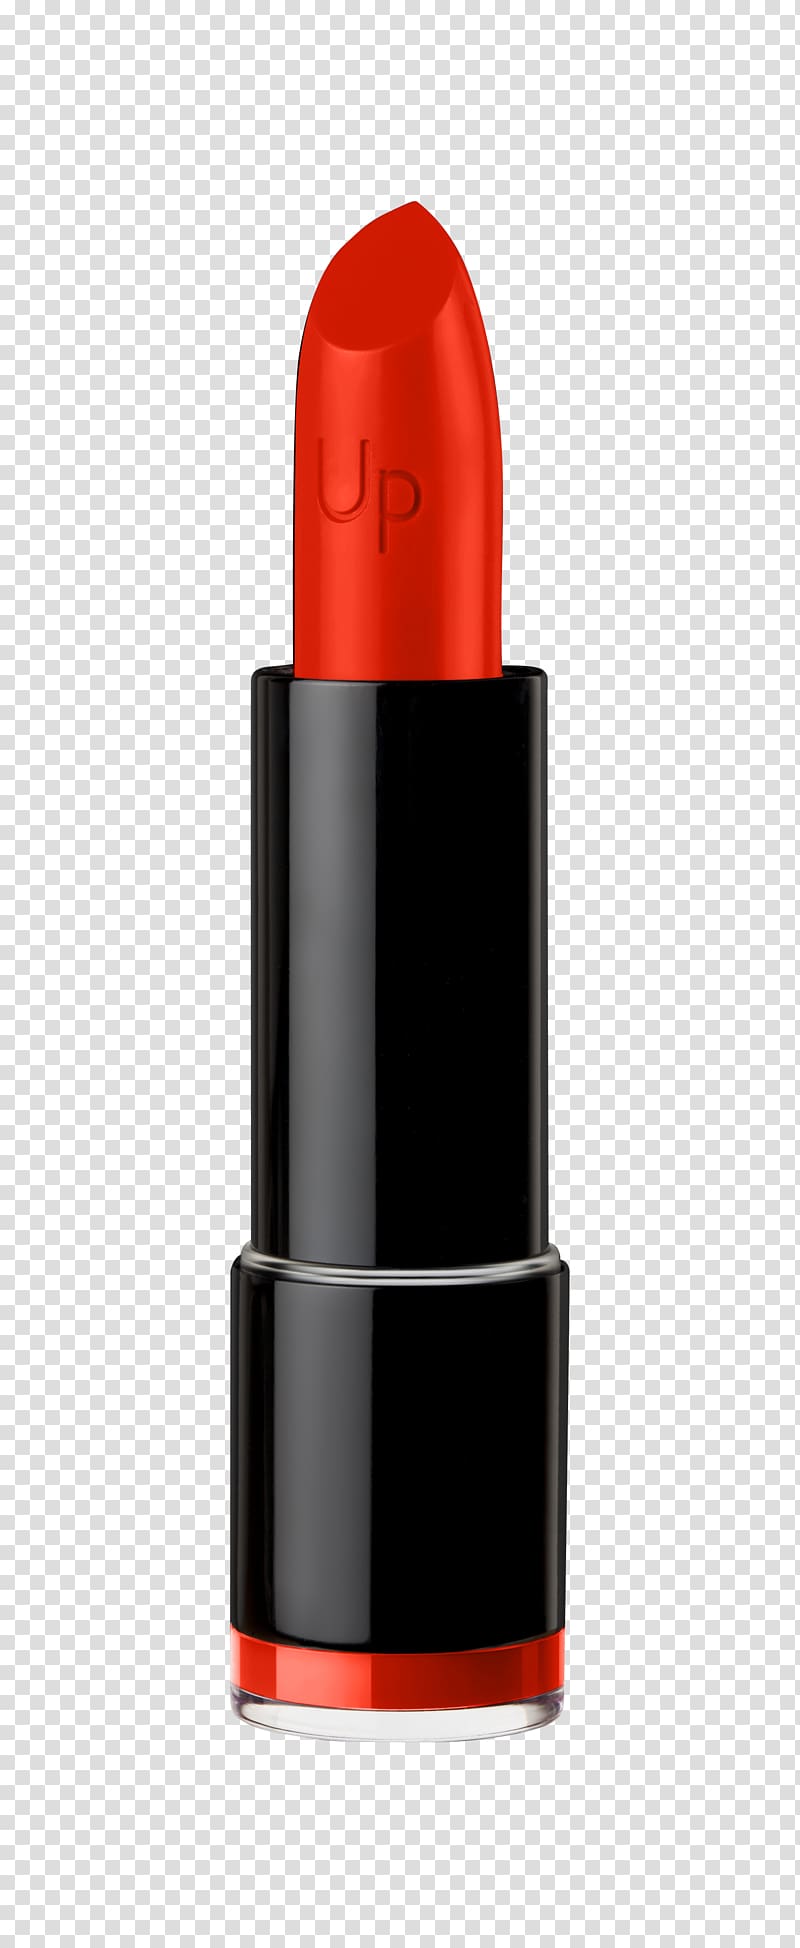 Lipstick Red Make-up black|Up, Lipstick transparent background PNG clipart